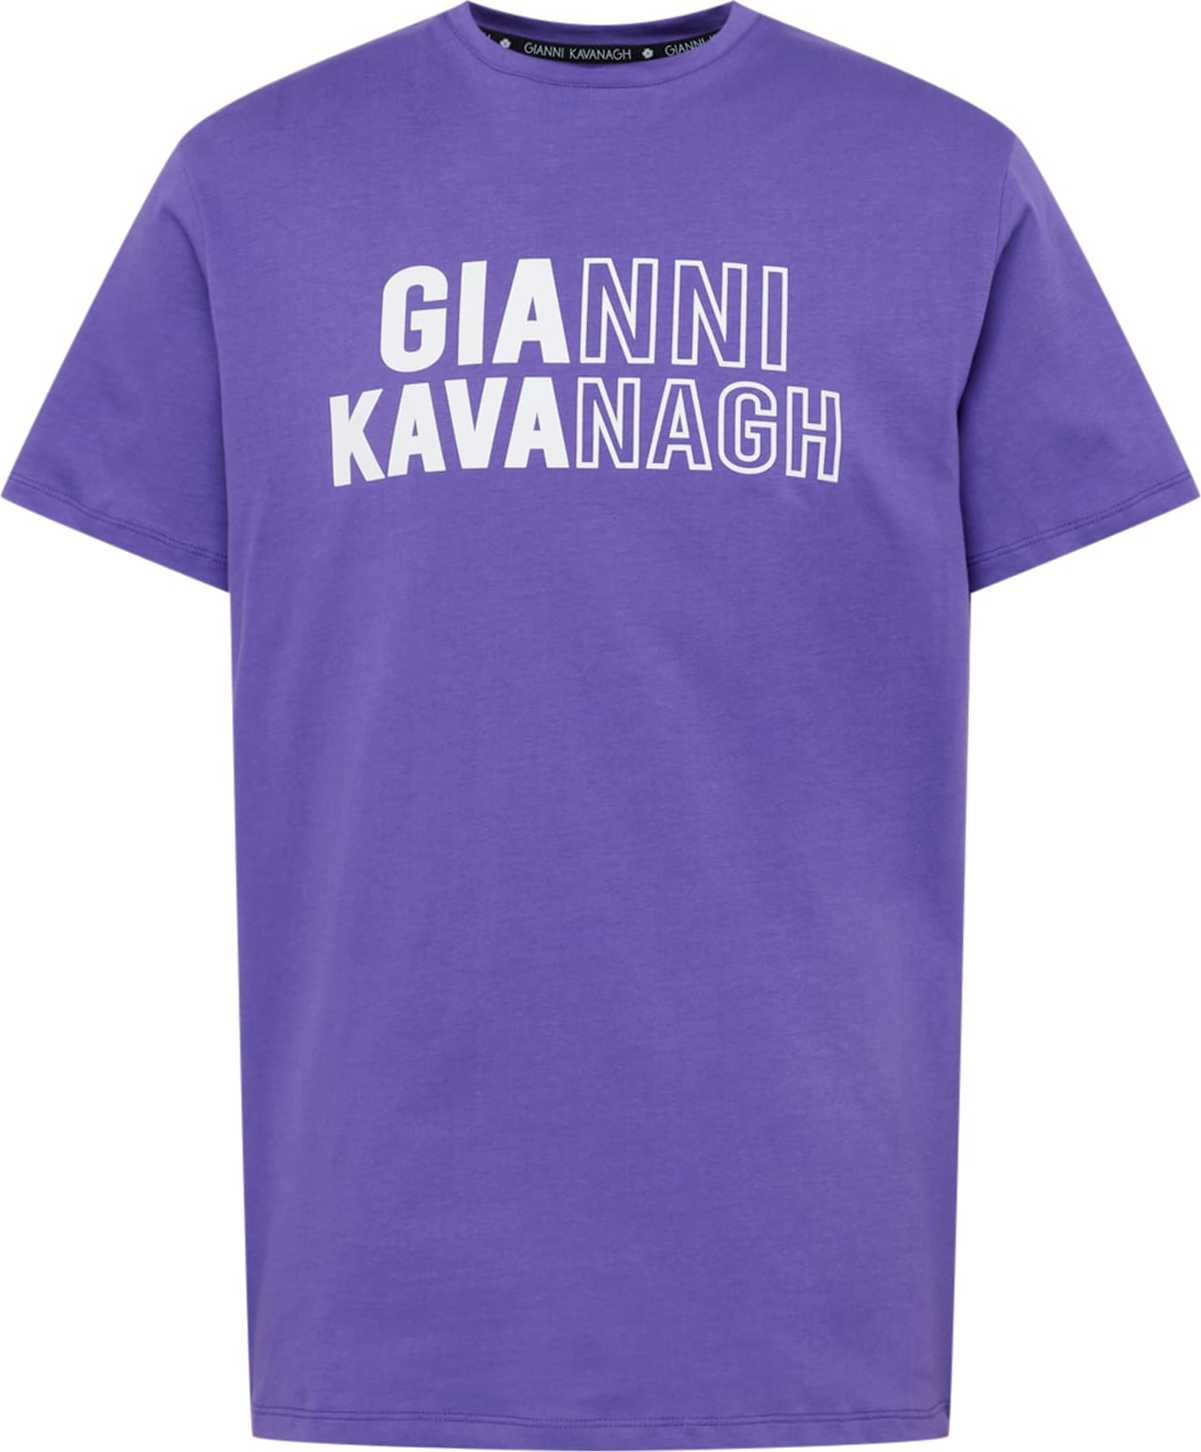 Gianni Kavanagh Tričko tmavě fialová / bílá